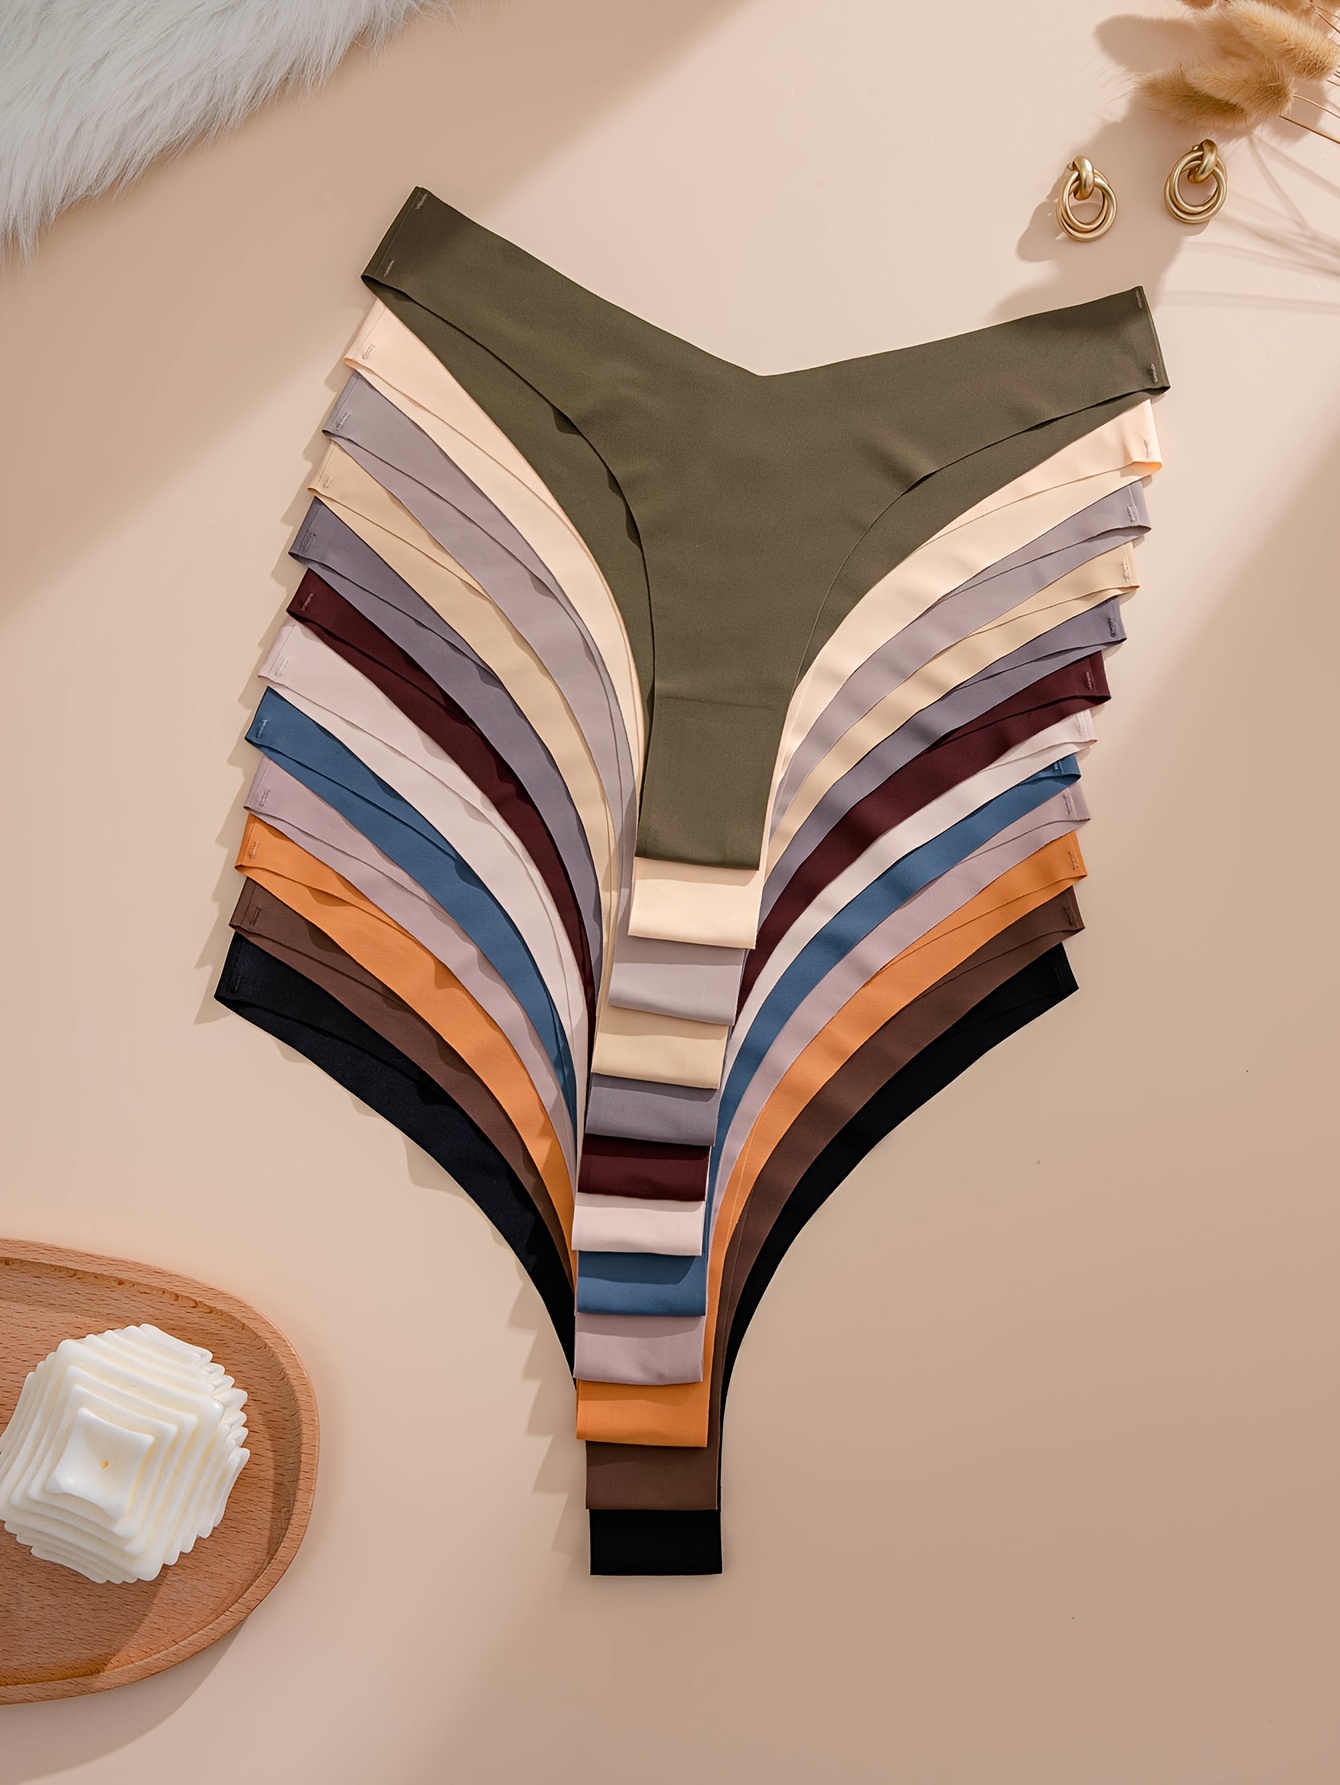 3Pcs Women's Satin Panties Comfortable Bikini Briefs Frill Trim